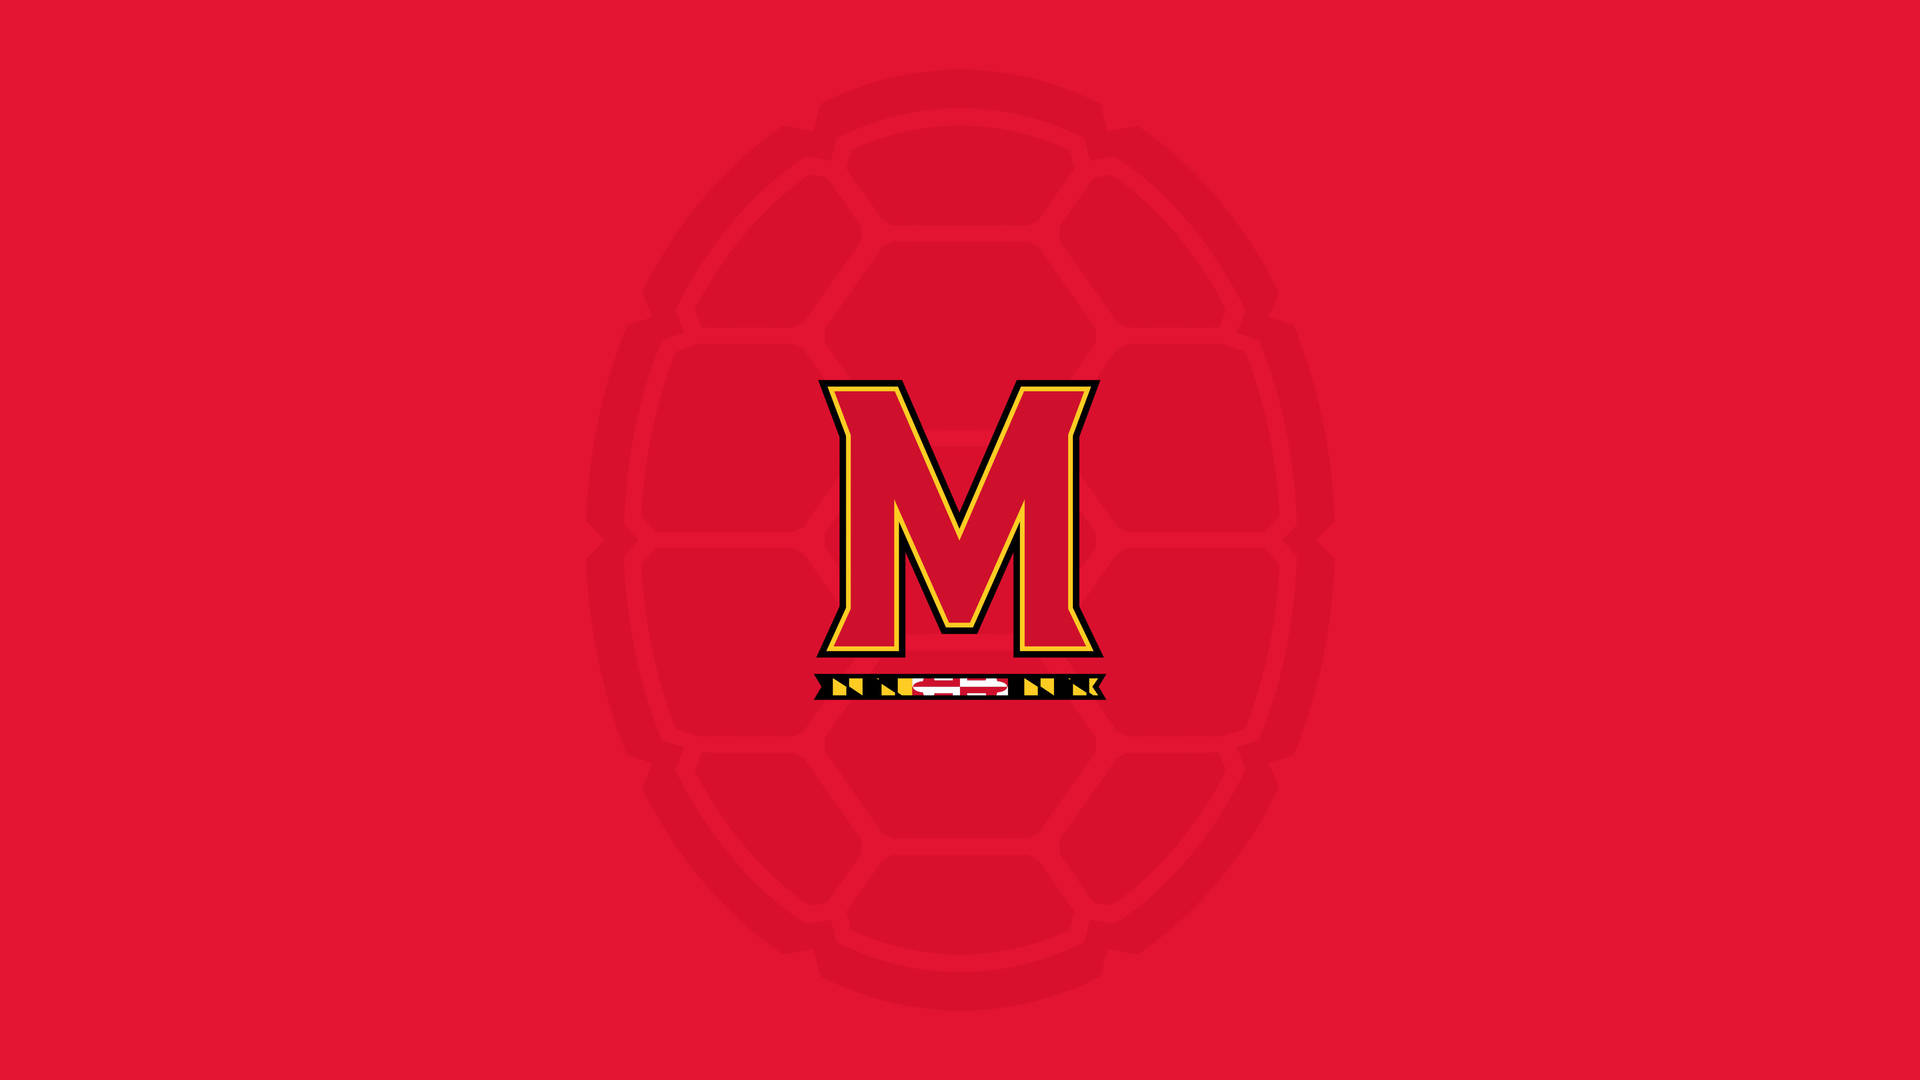 Fondosutil Rojo De La Universidad De Maryland Fondo de pantalla